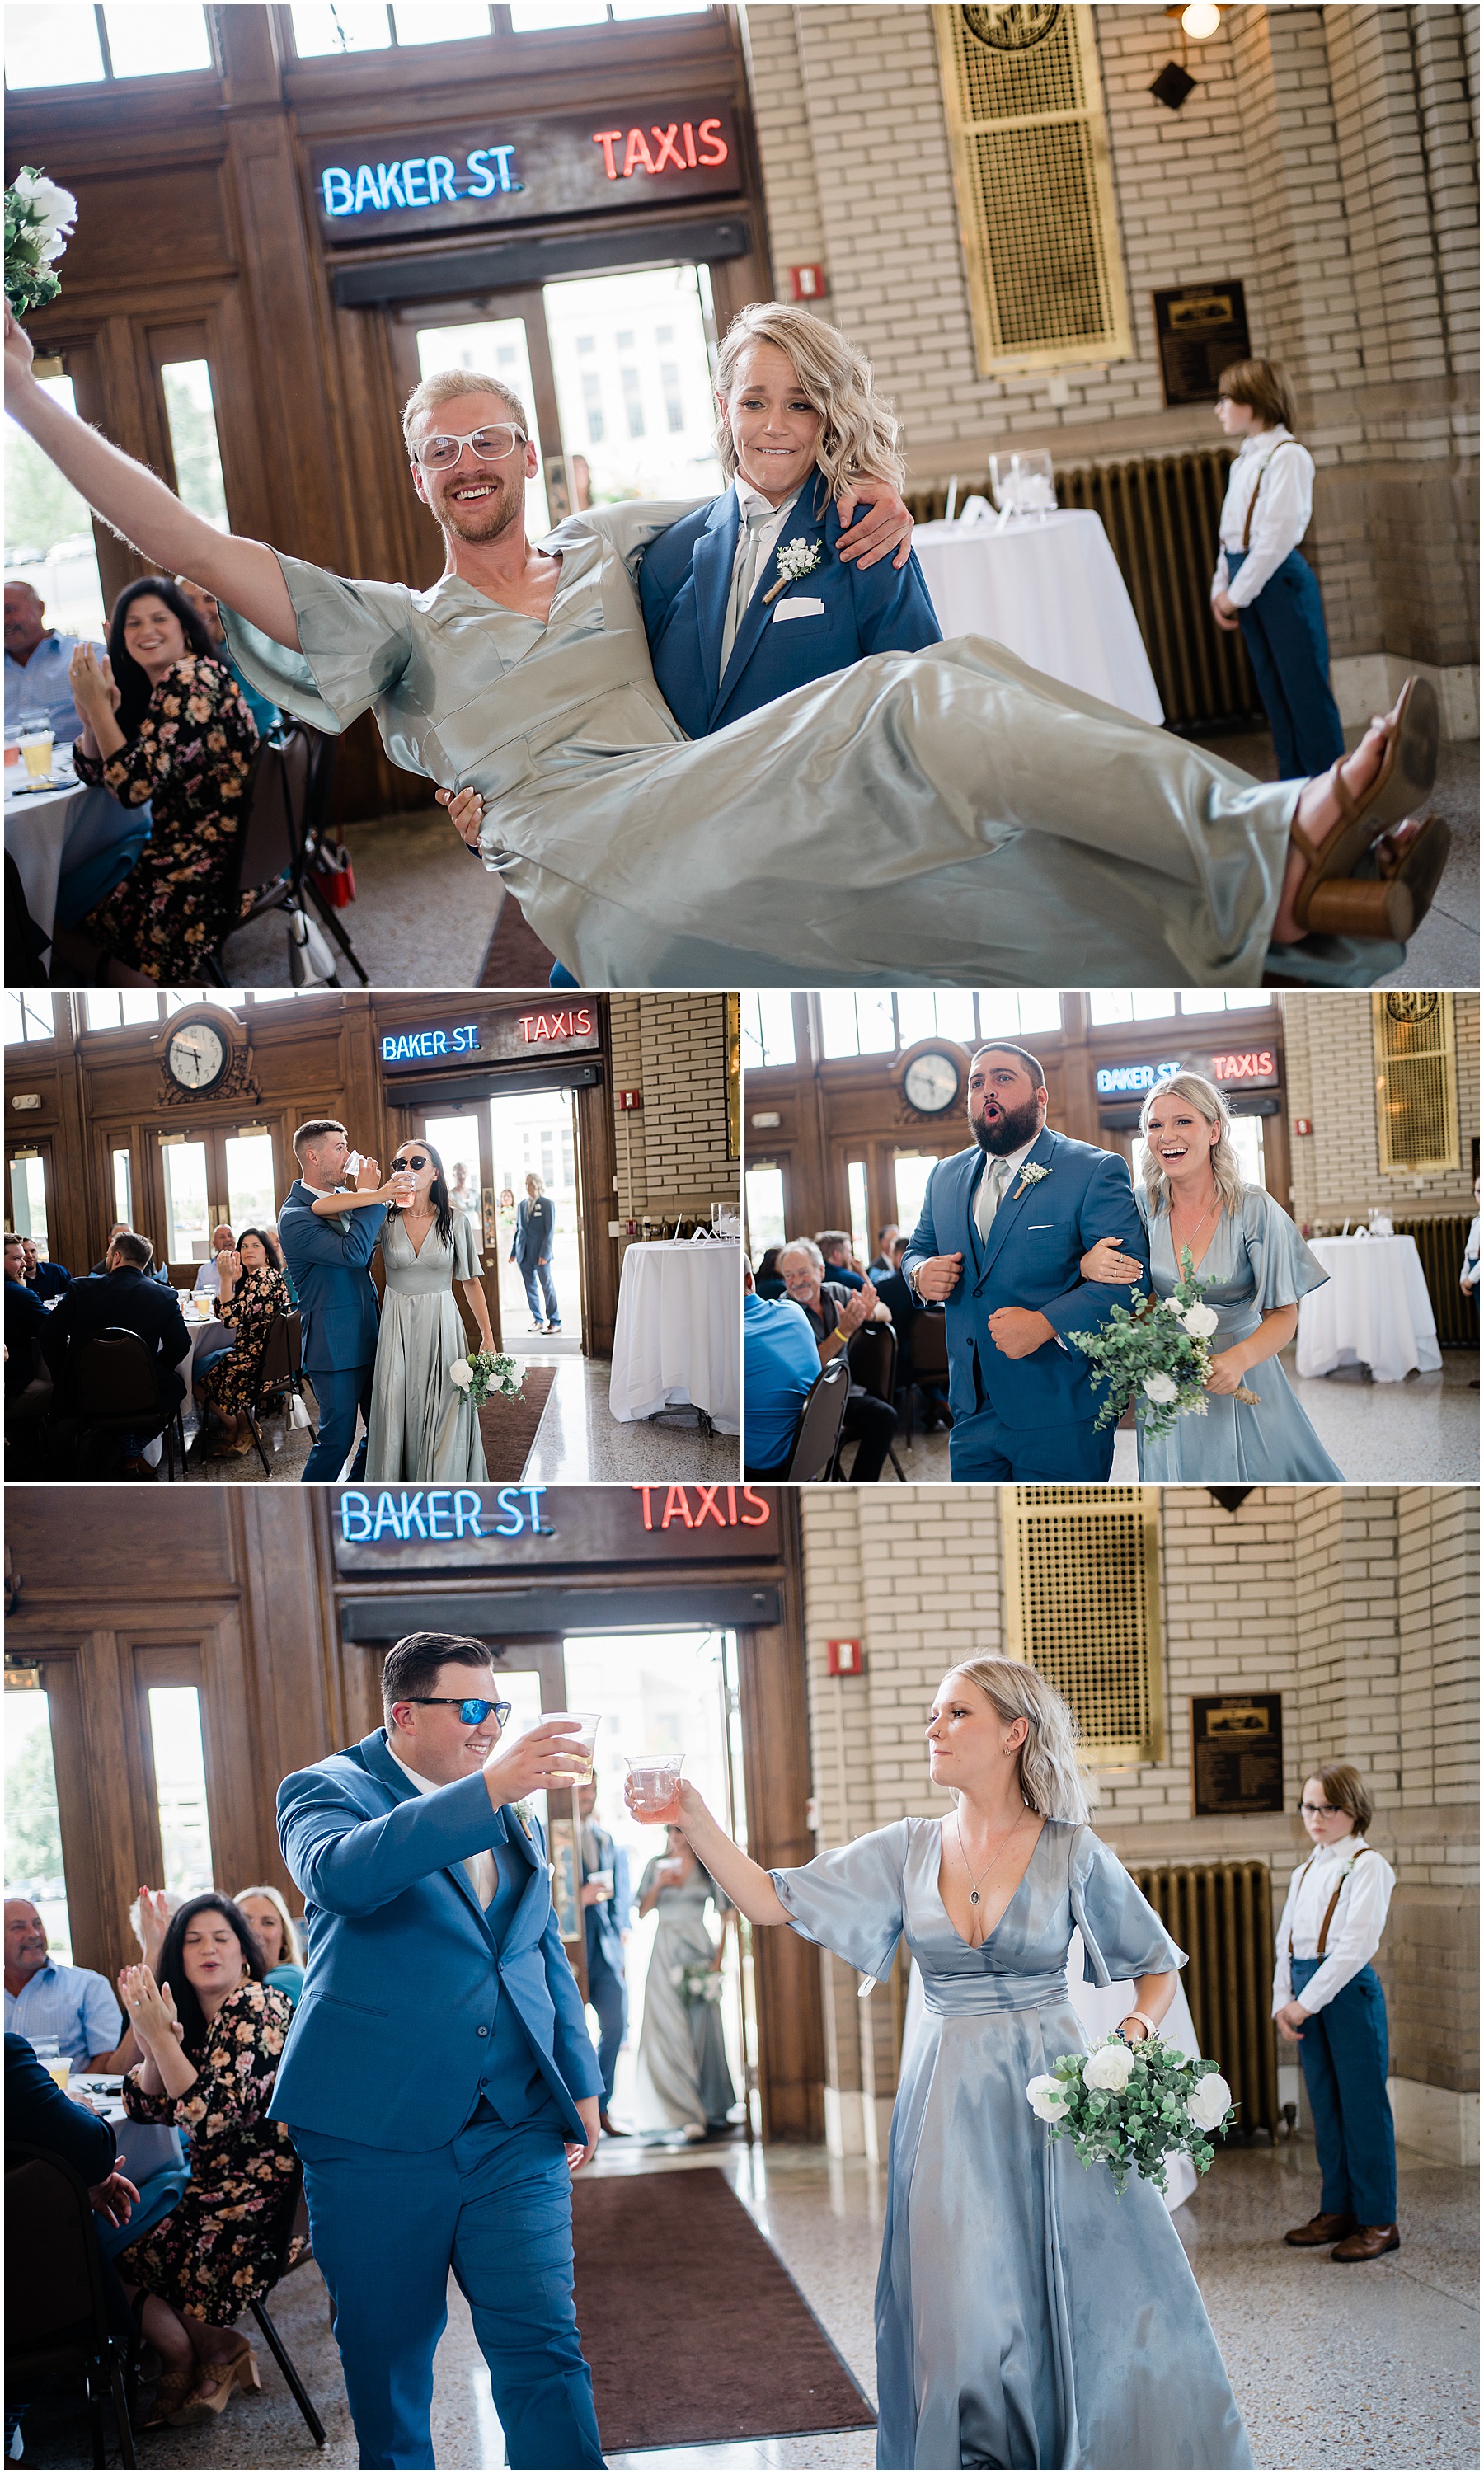 Fort Wayne wedding photographers capture wedding party entrances to reception